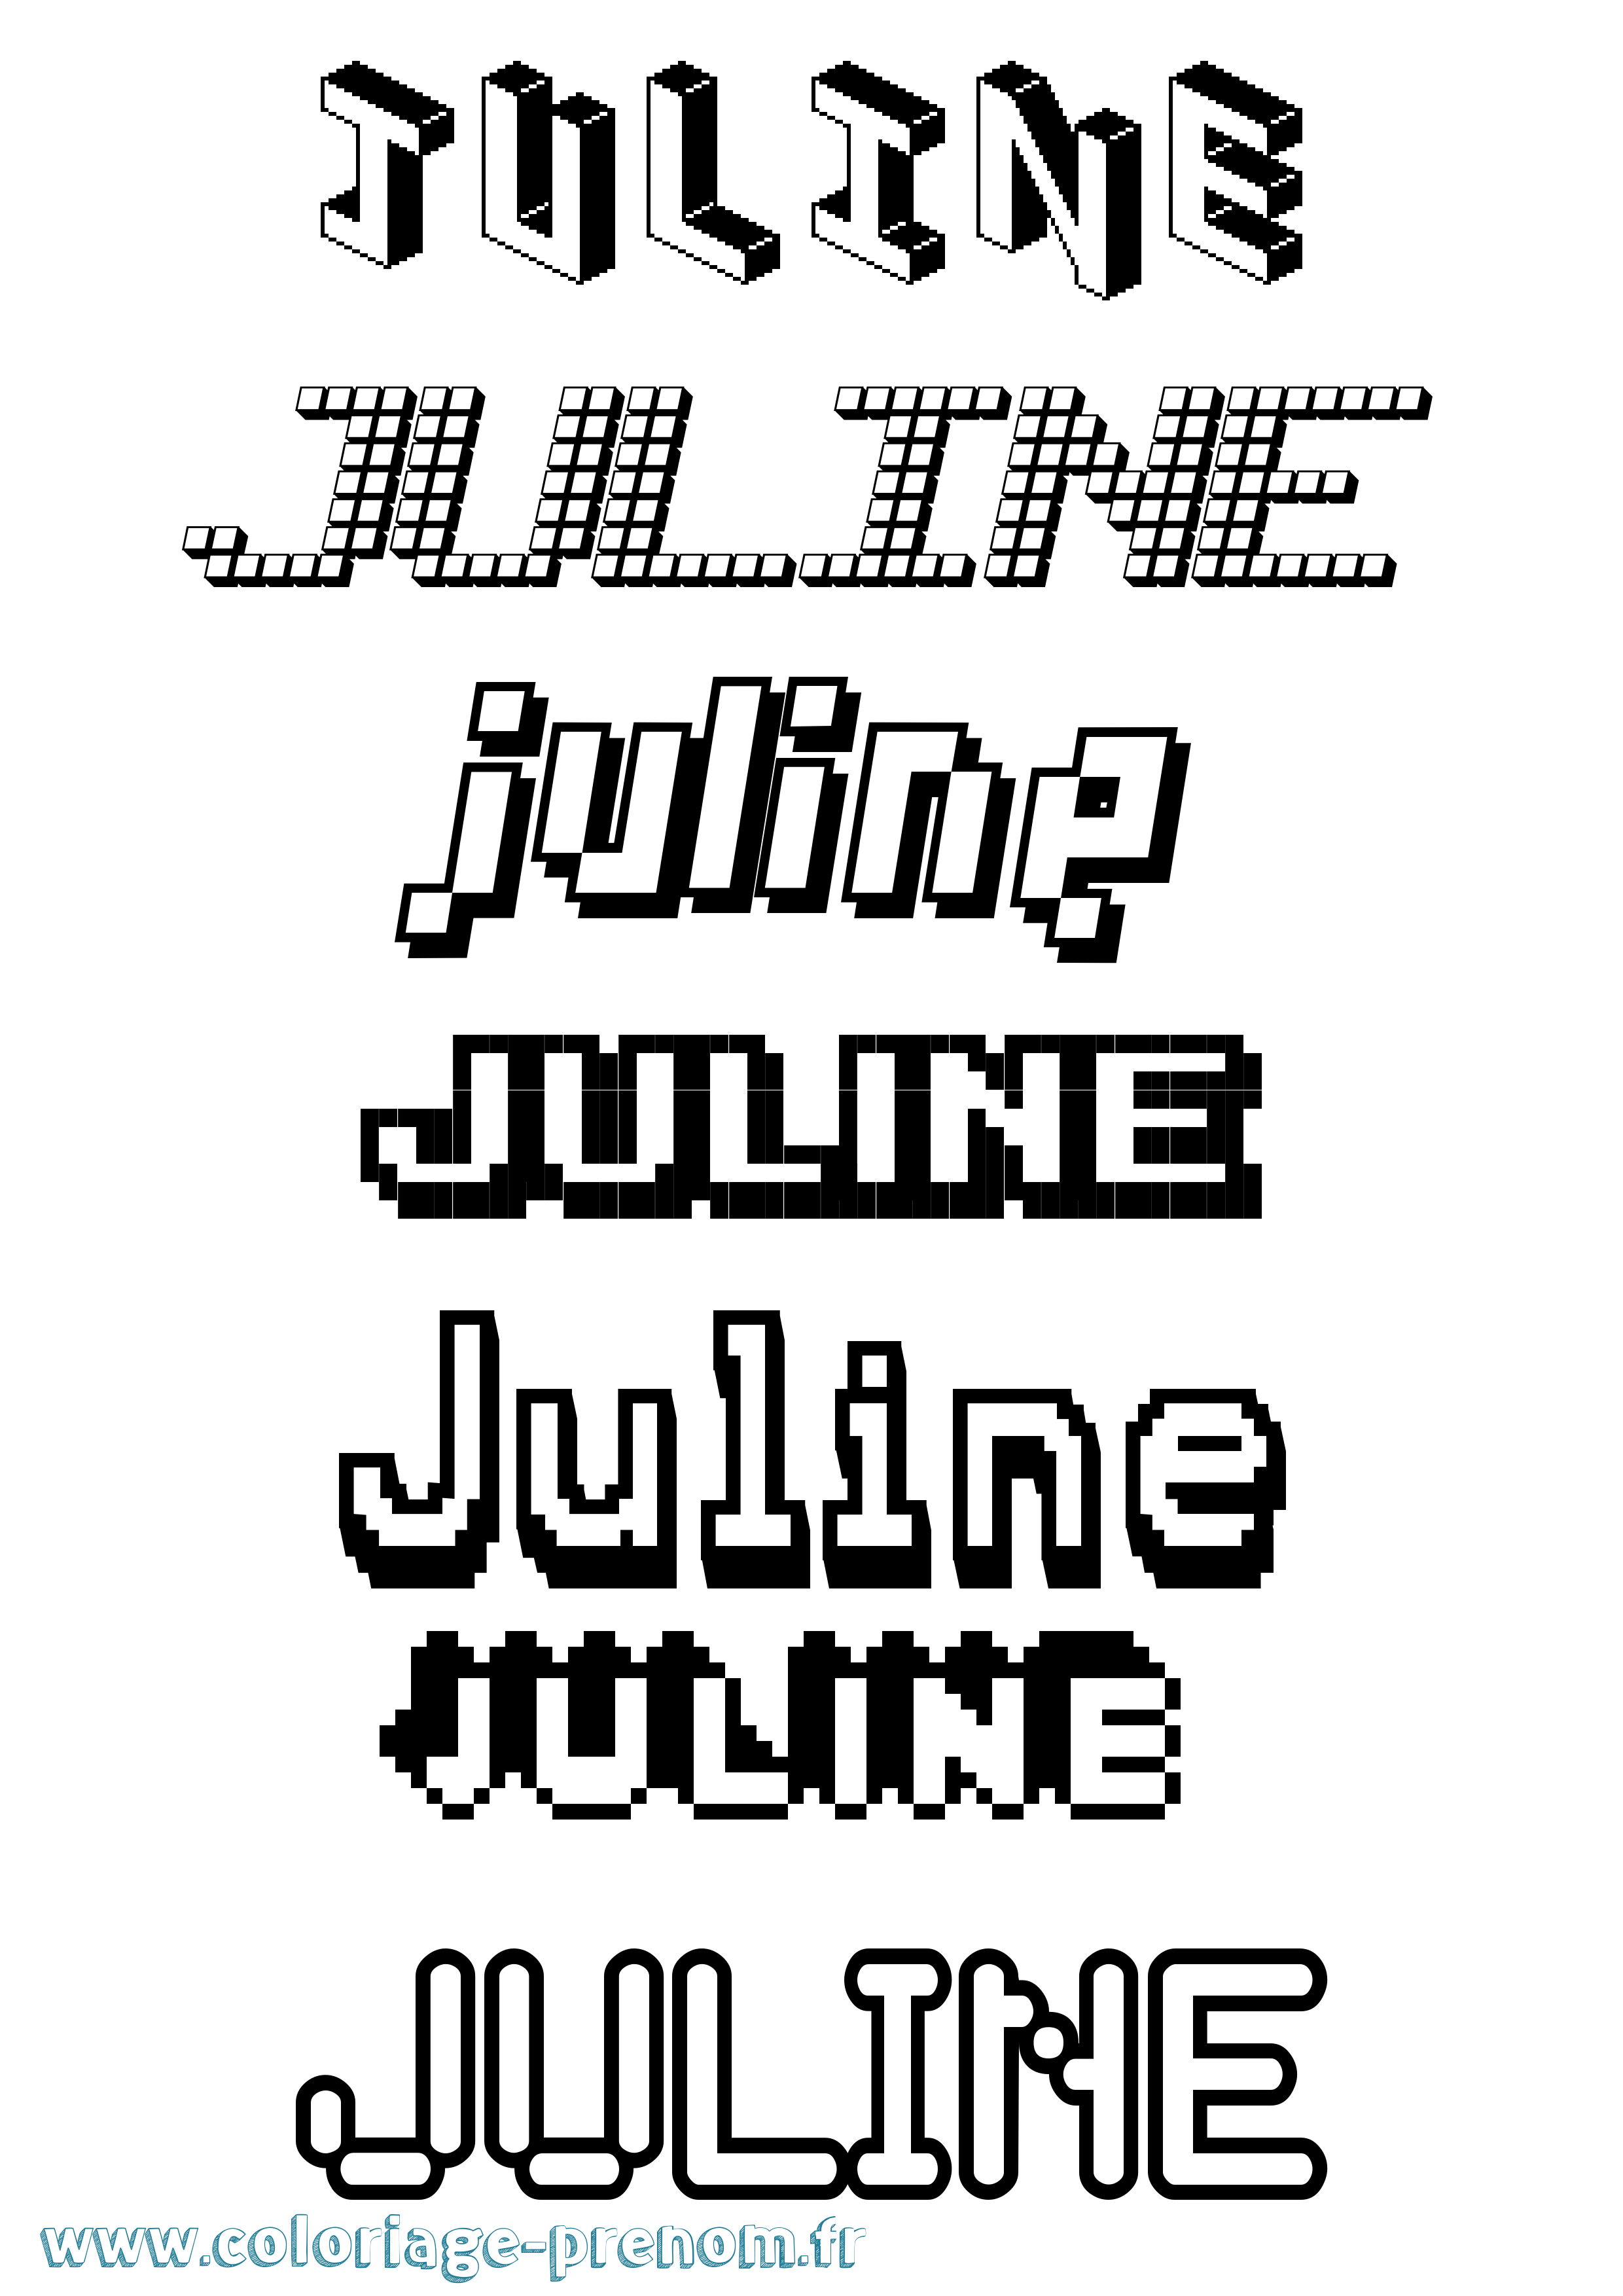 Coloriage prénom Juline Pixel